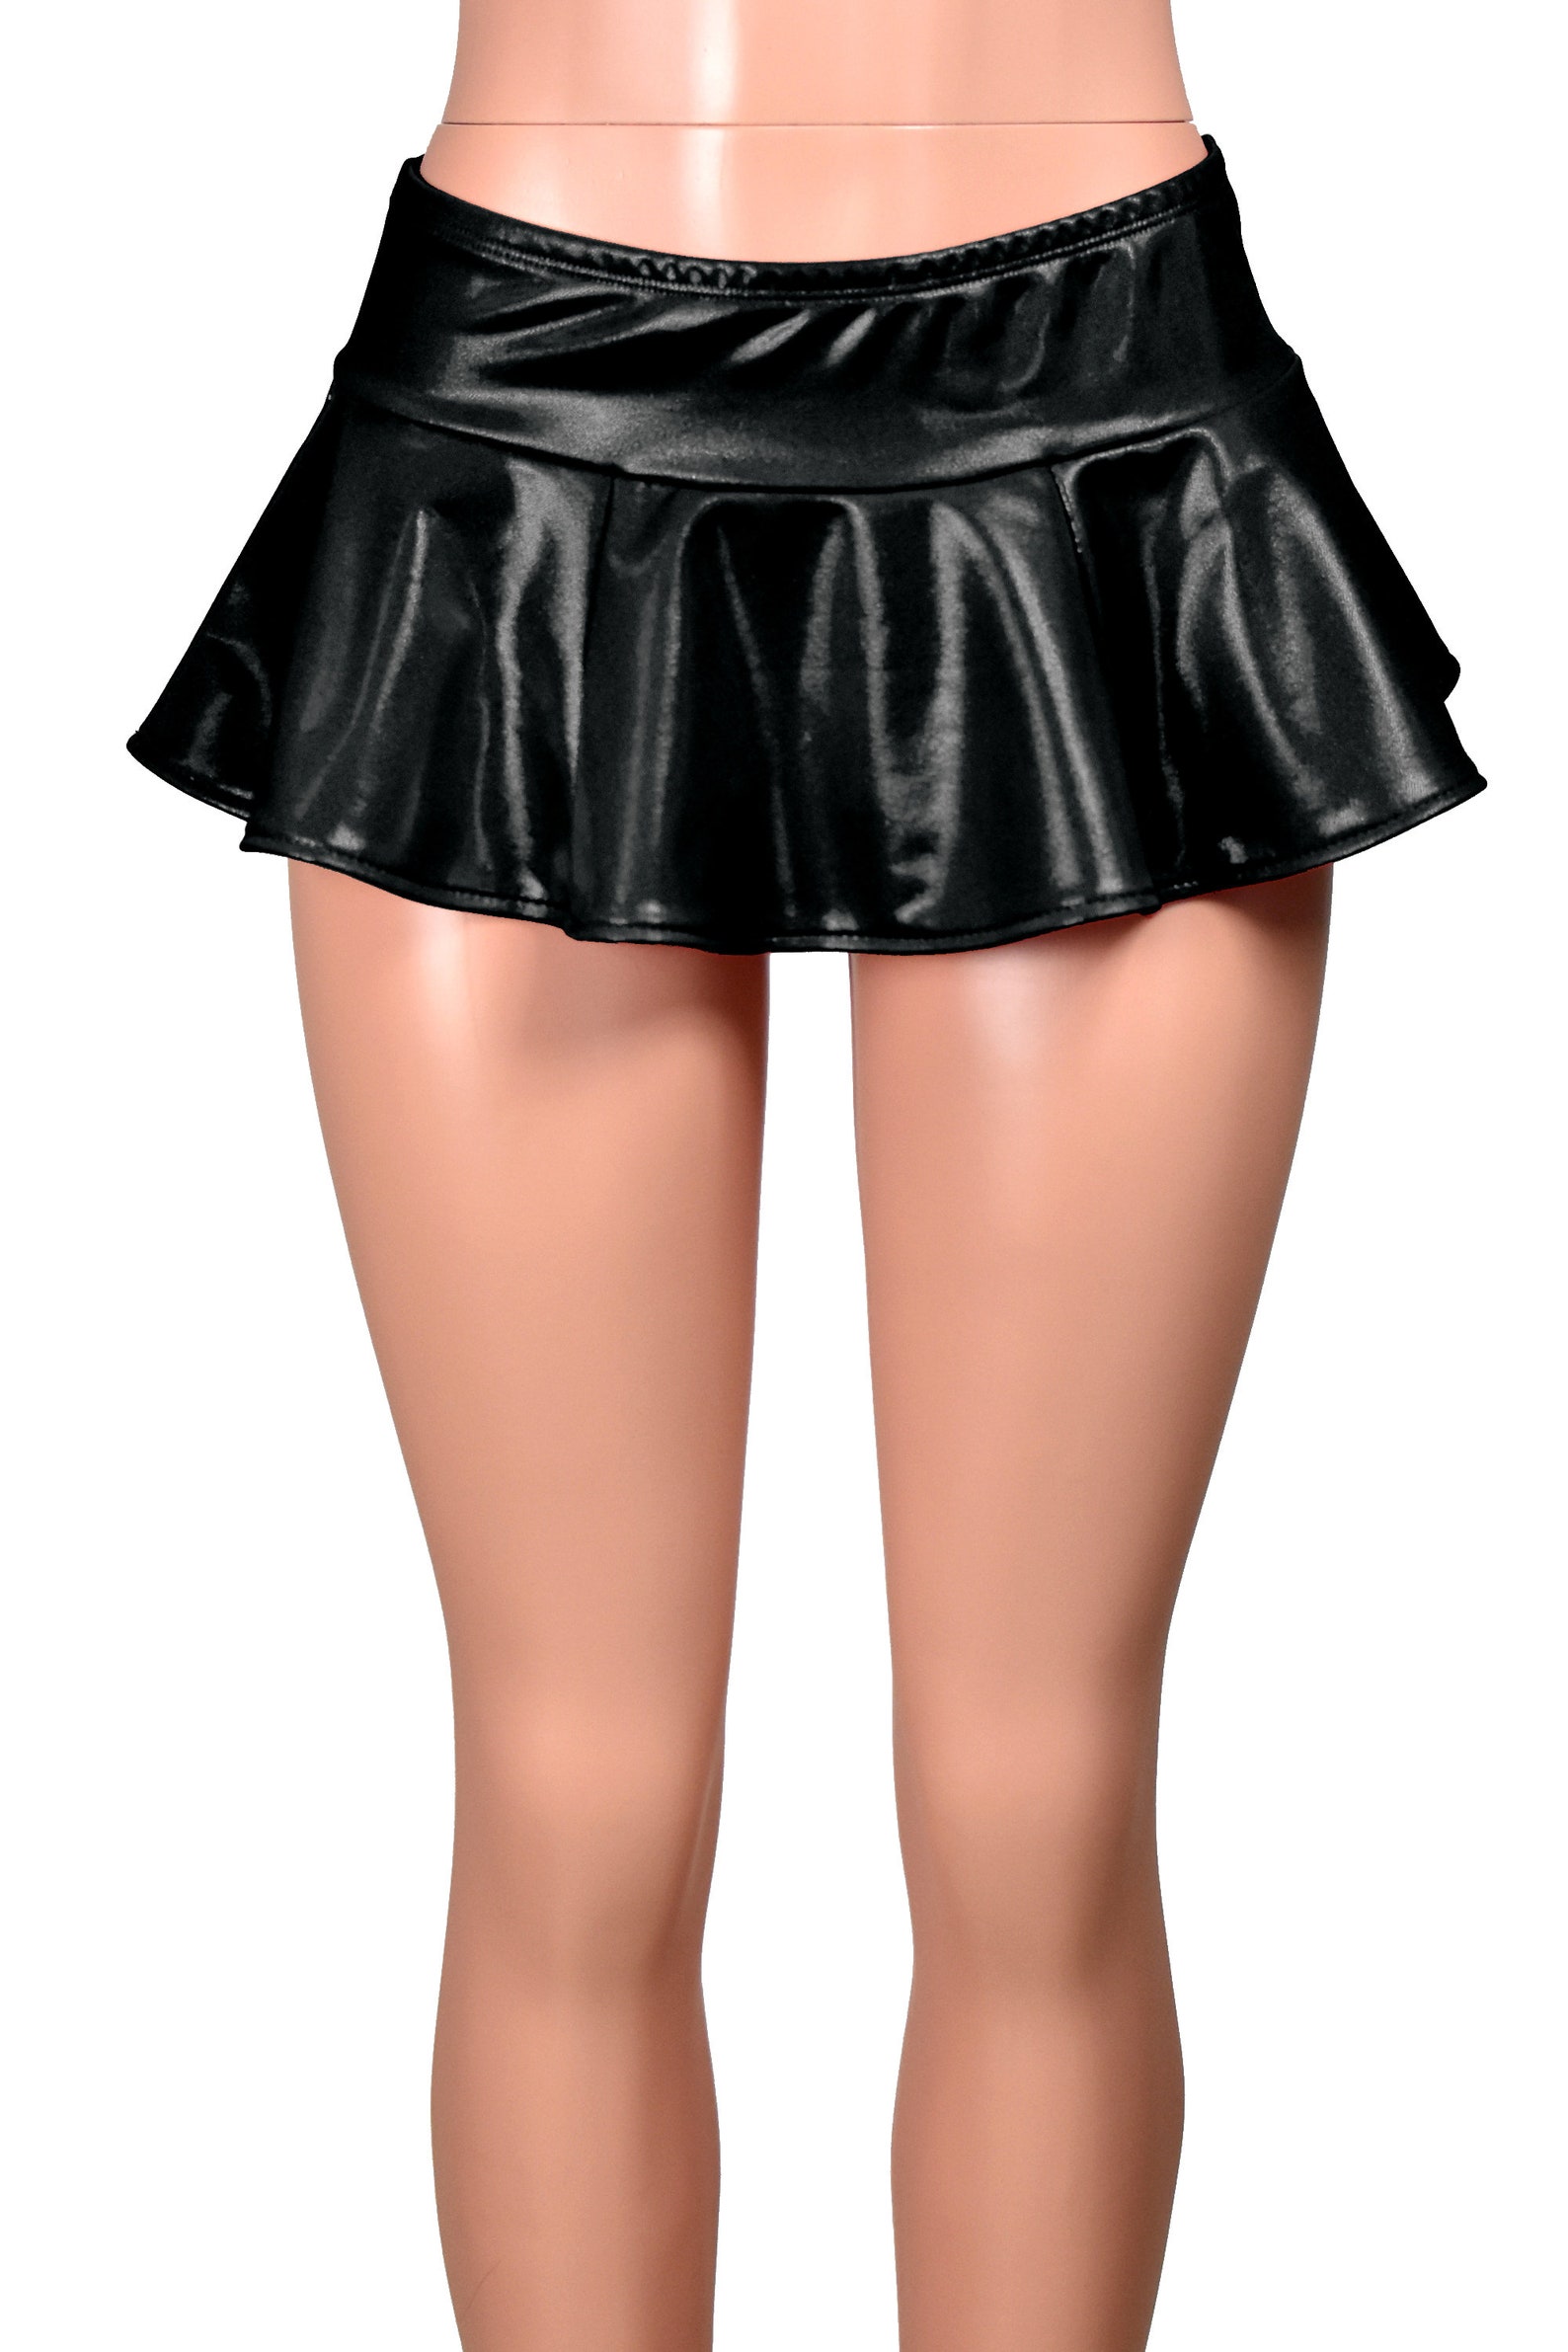 Shiny Black Metallic Micro Mini Skirt XS S M L Xl 2xl 3xl Plus - Etsy